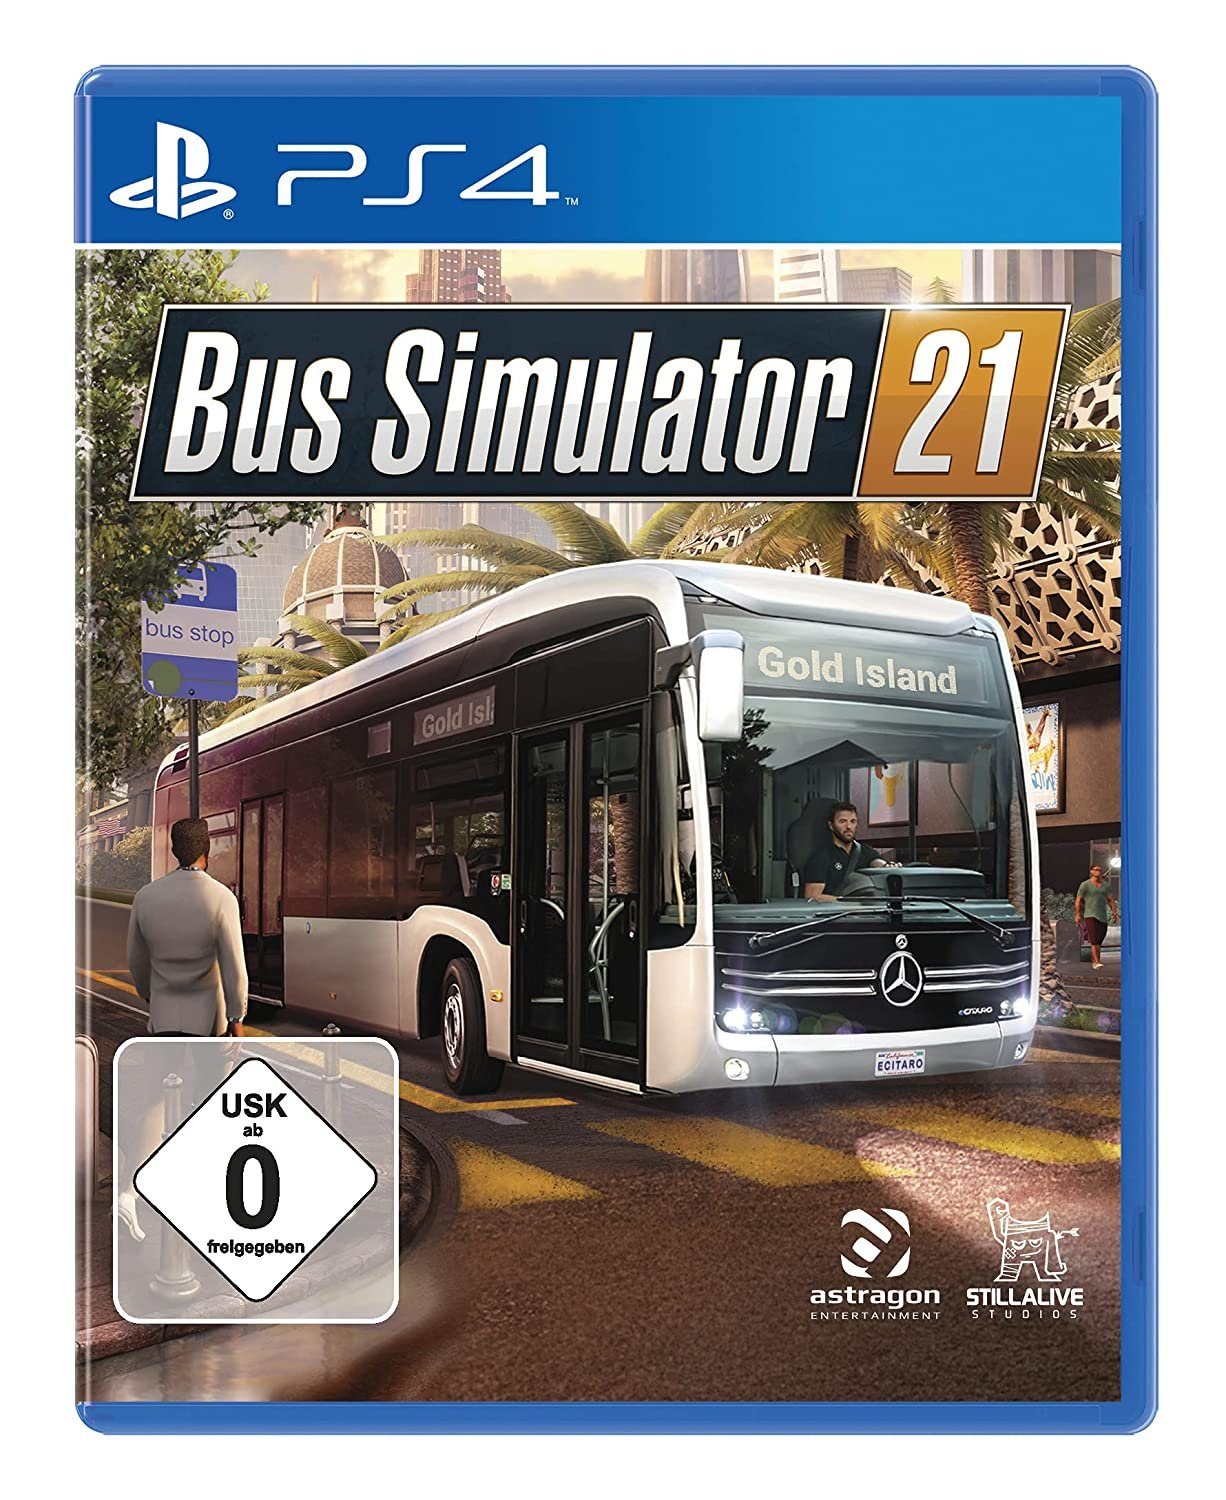 PlayStation 21 4 Bus Simulator